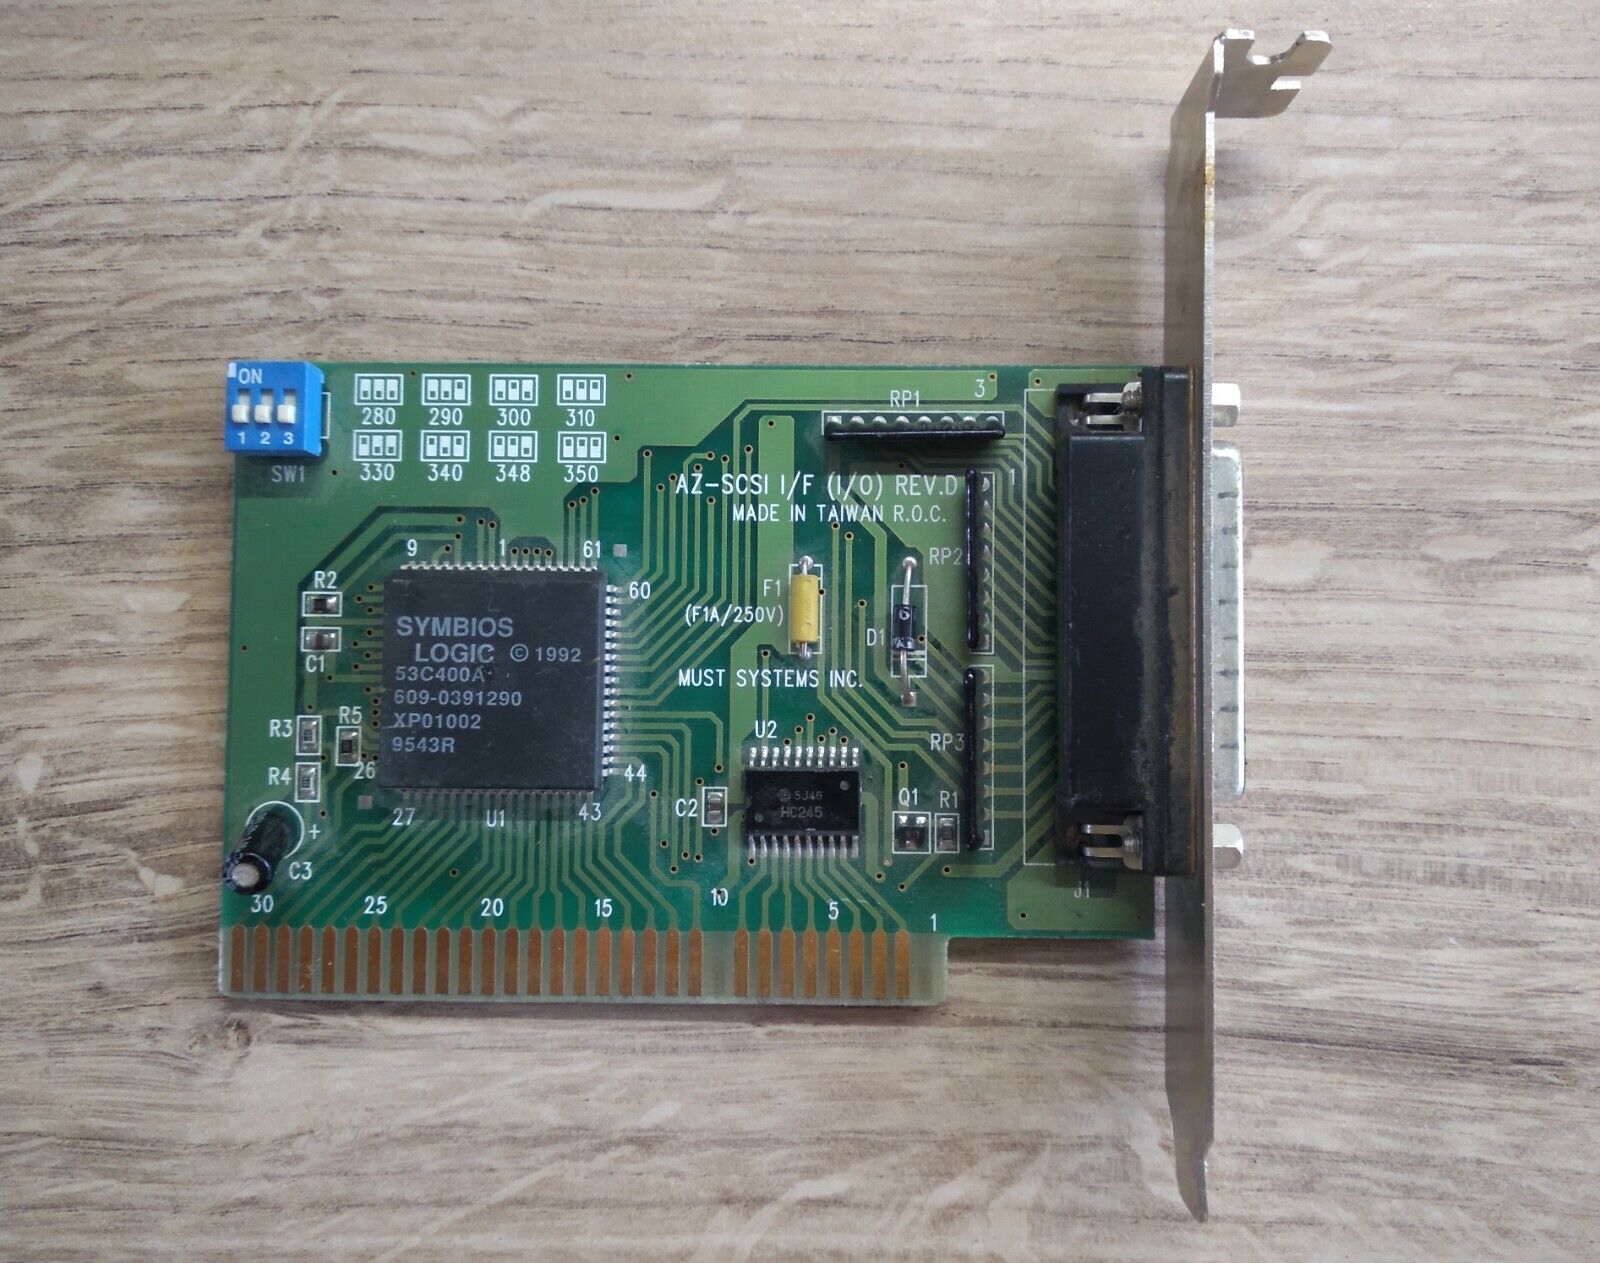 VTG 90\'s 8 Bit ISA Card MUST SYSTEMS AZ-SCSI I/F(I/0) 25pin port DB-25 Interface